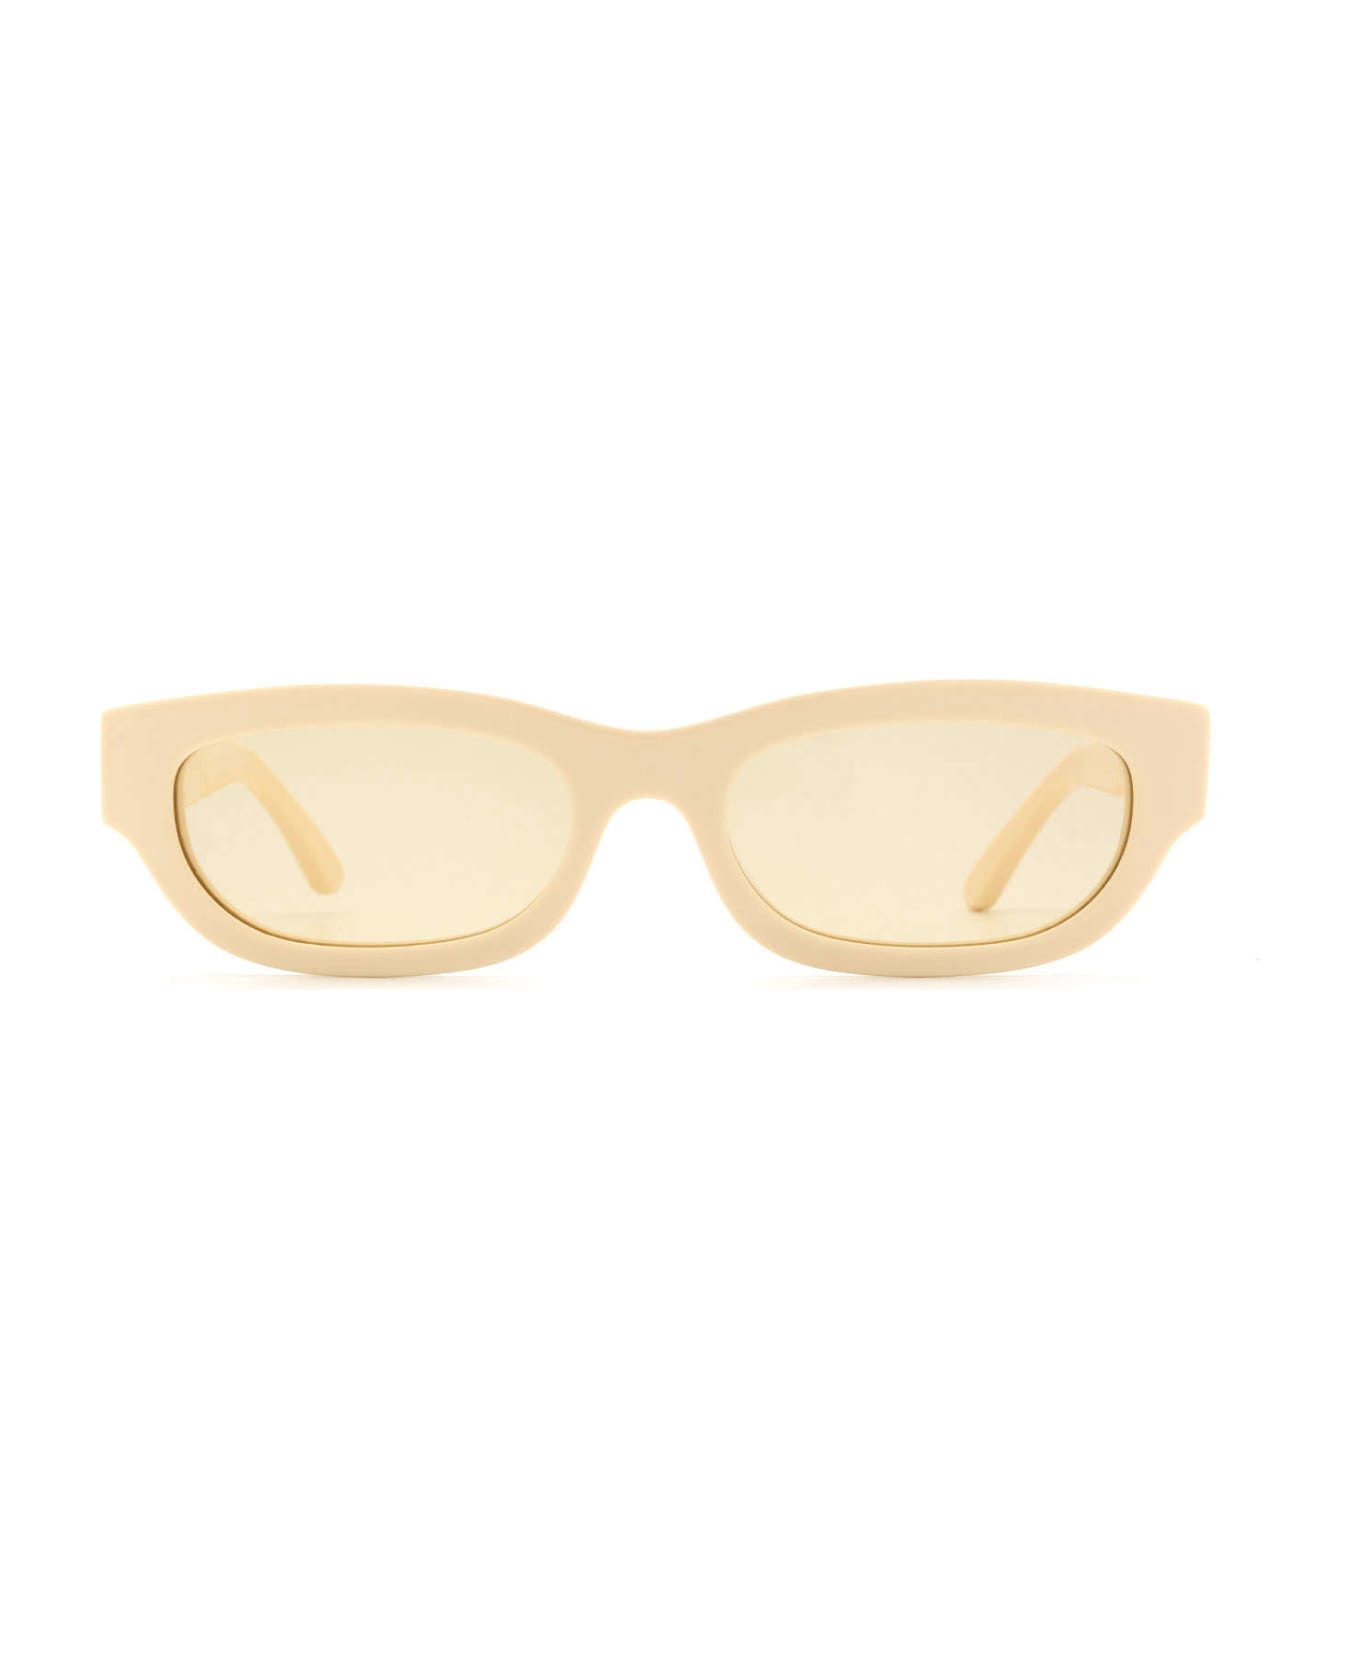 Huma Tojo Ivory Sunglasses - Ivory